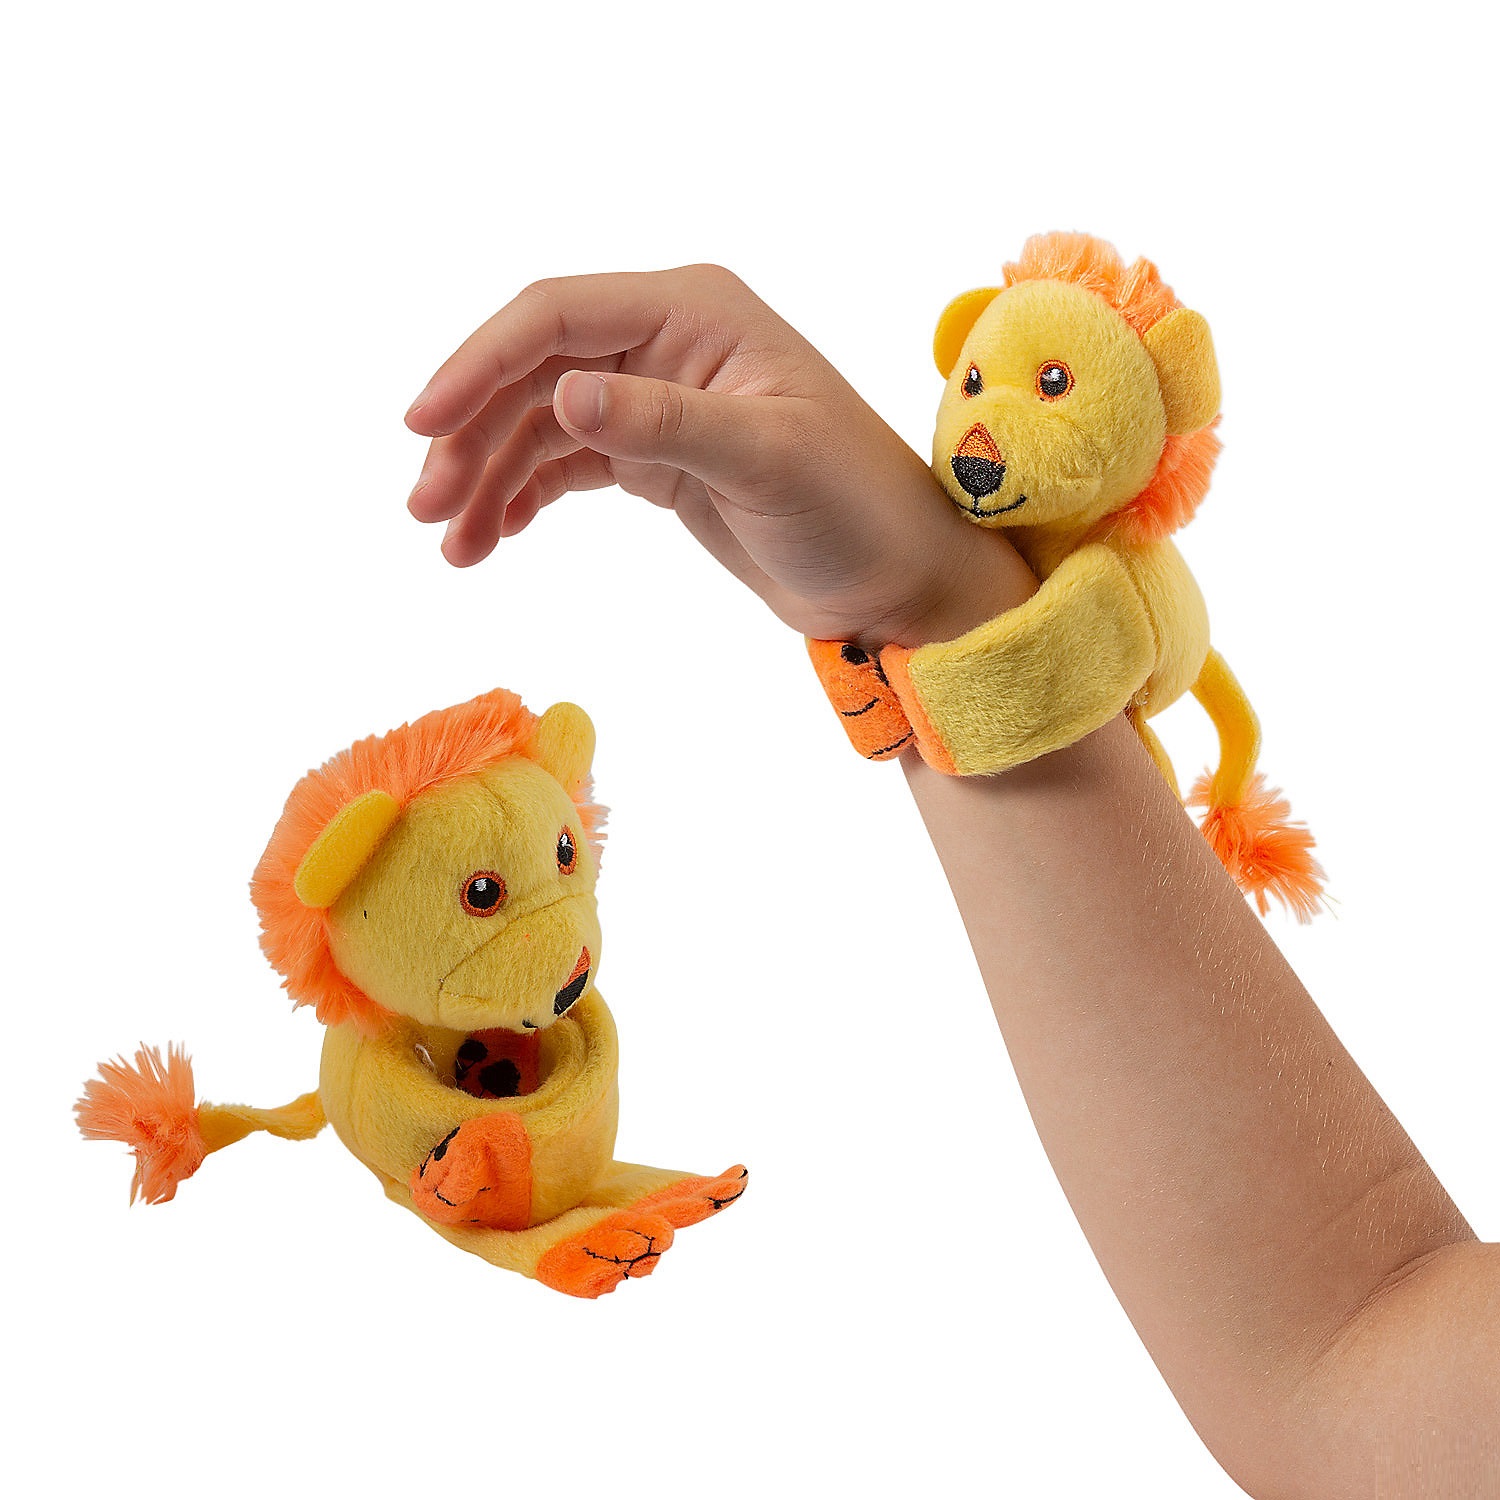 hugging-stuffed-lion-slap-bracelets-12-pc-_13844220